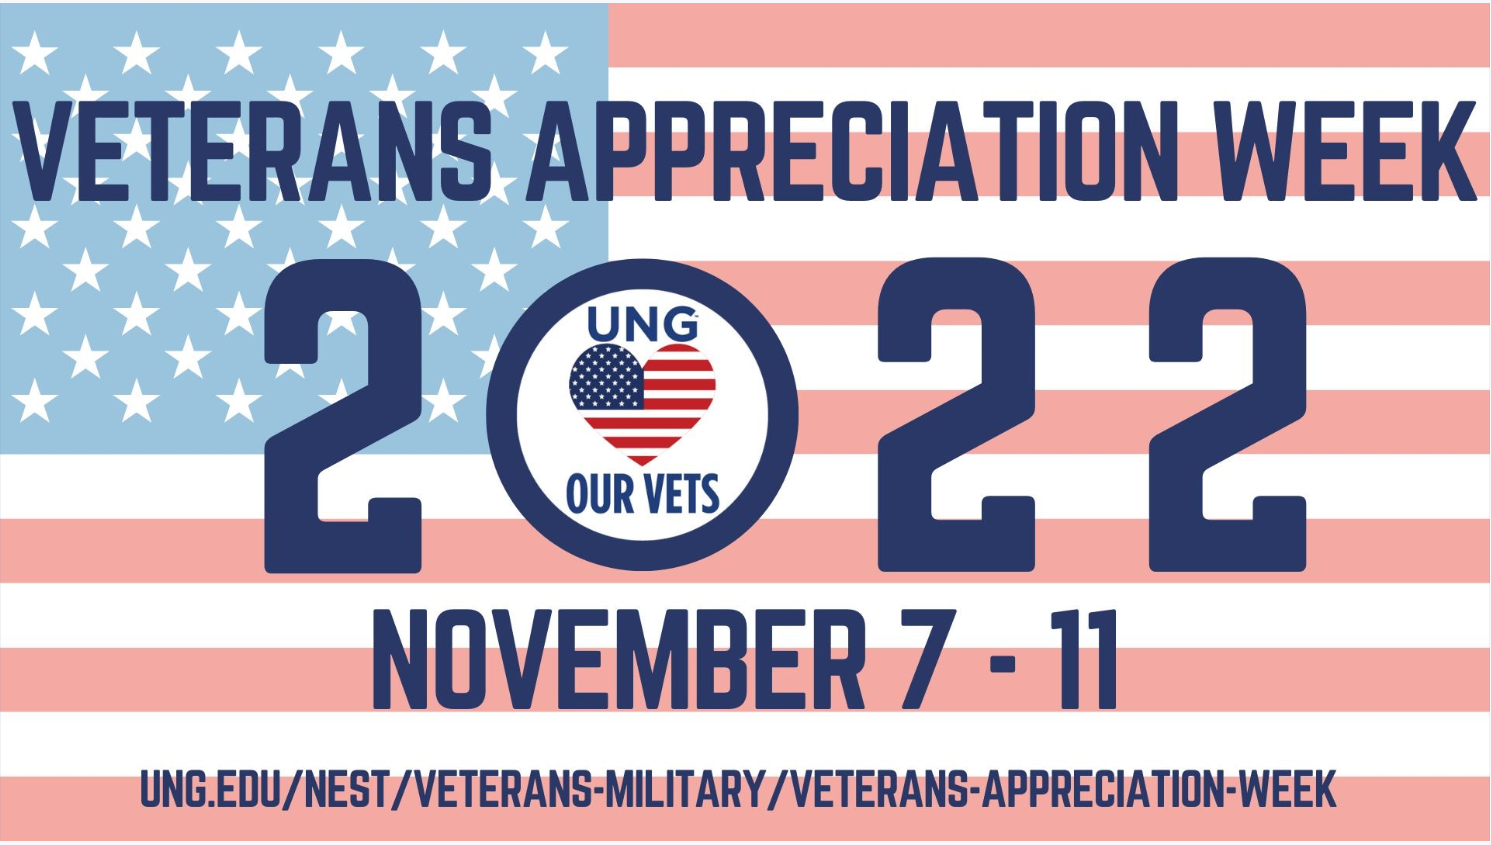 Celebrations will honor veterans